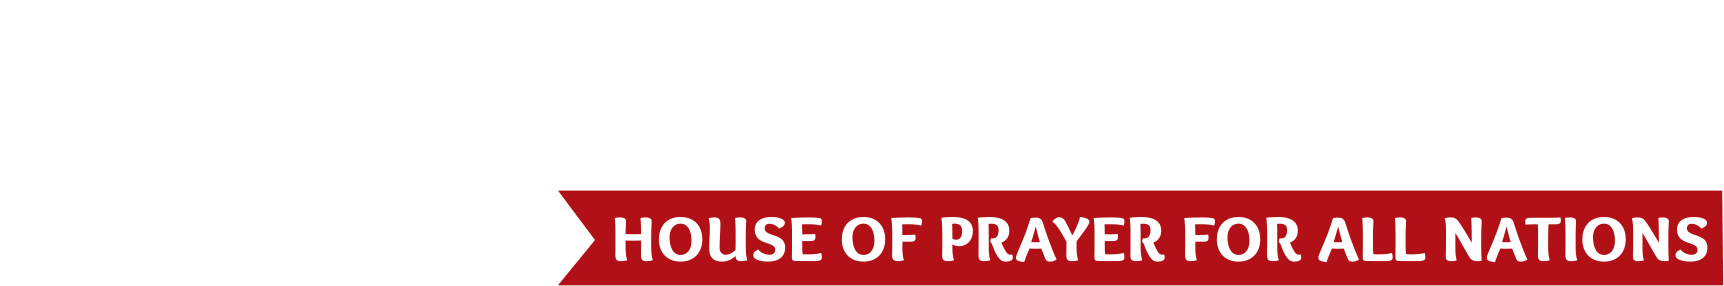 Bethany International Church Logo